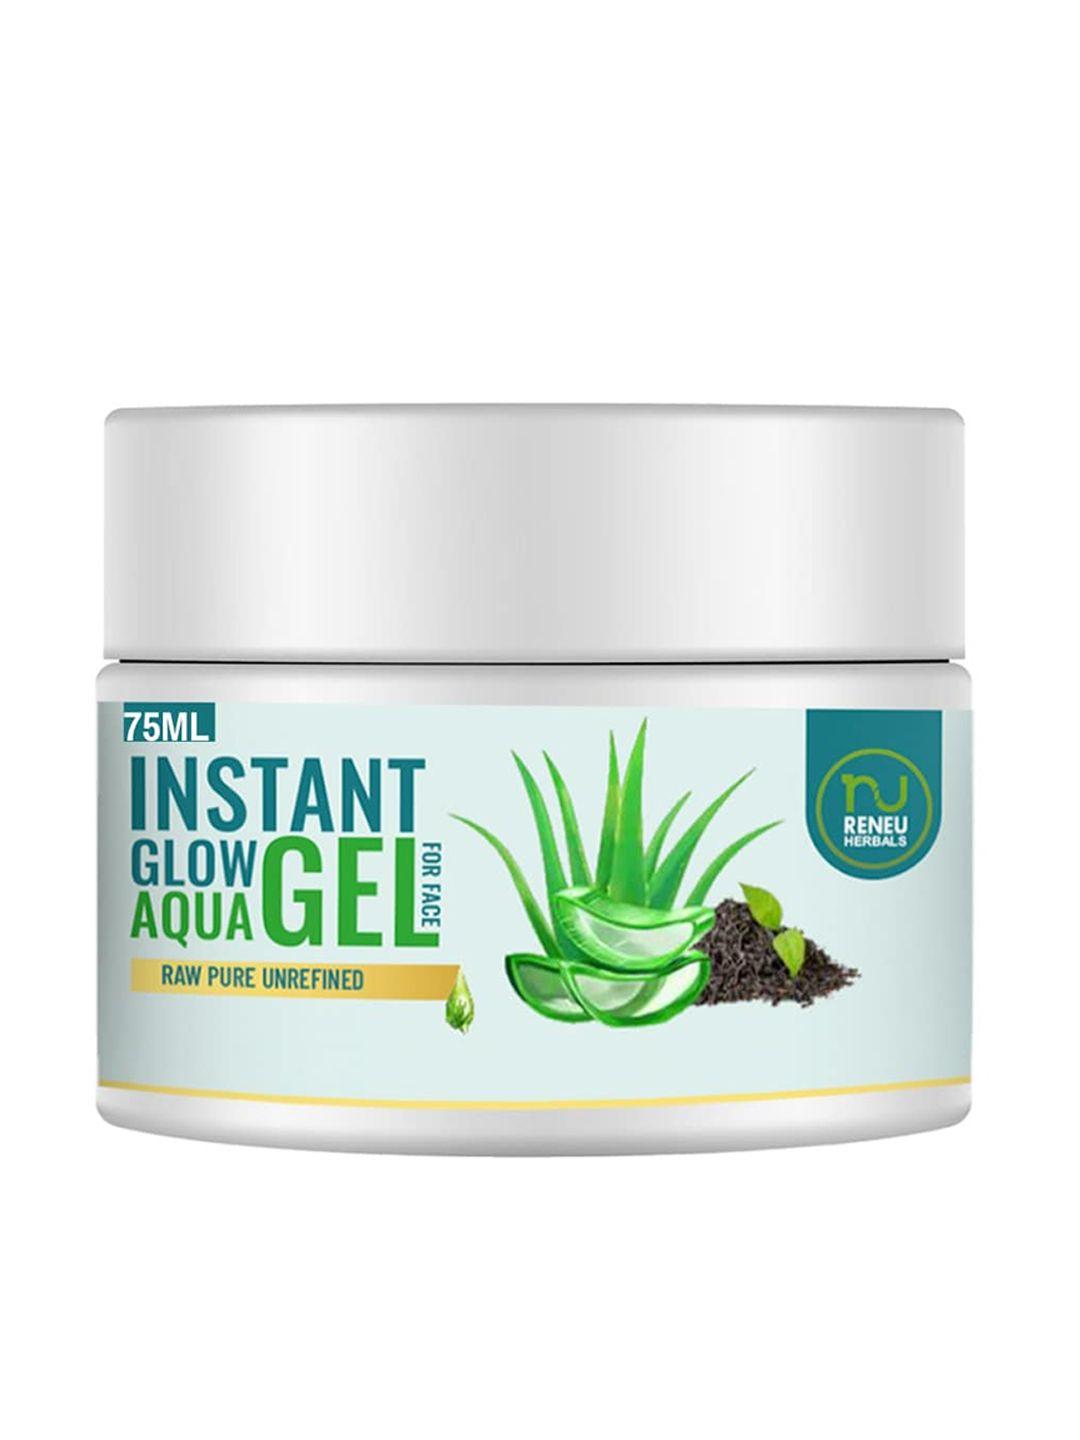 reneu herbals instant glow raw pure unrefined aqua gel 75ml